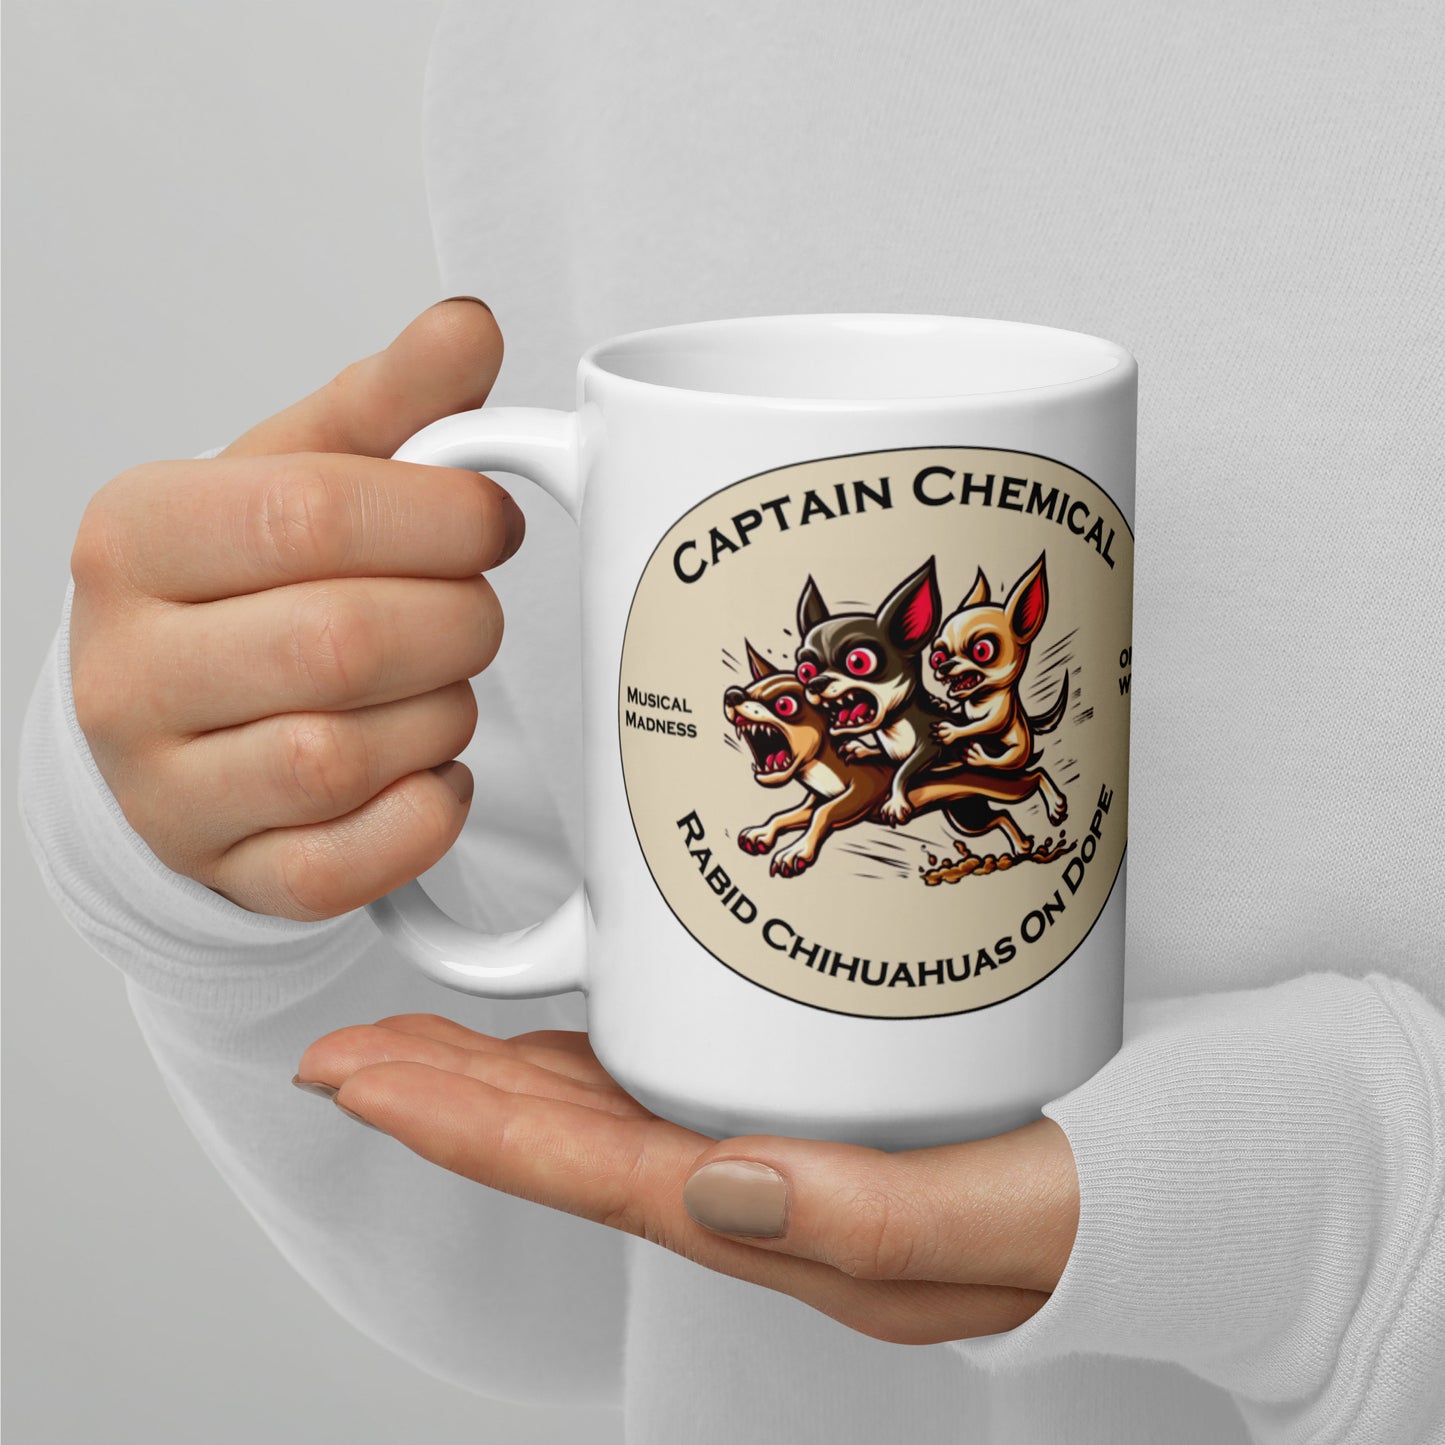 Captain Chemical Chihuahuas Glossy White Mug